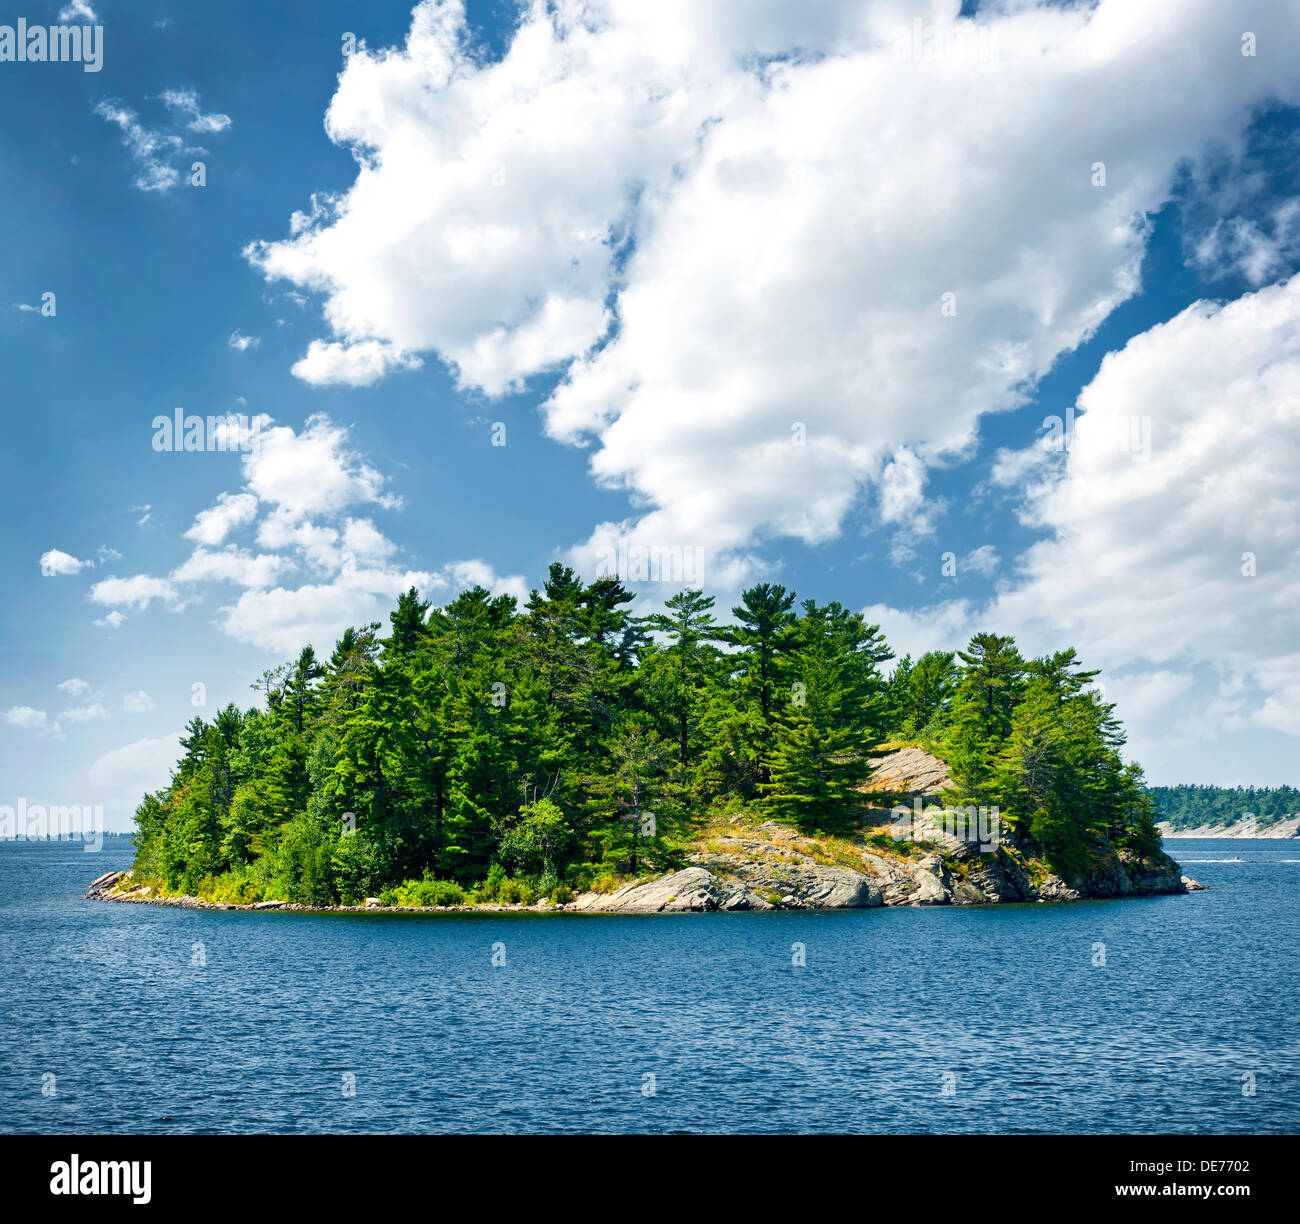 Small rocky island in Georgian Bay near Parry Sound, Ontario, Canada. Stock Photo